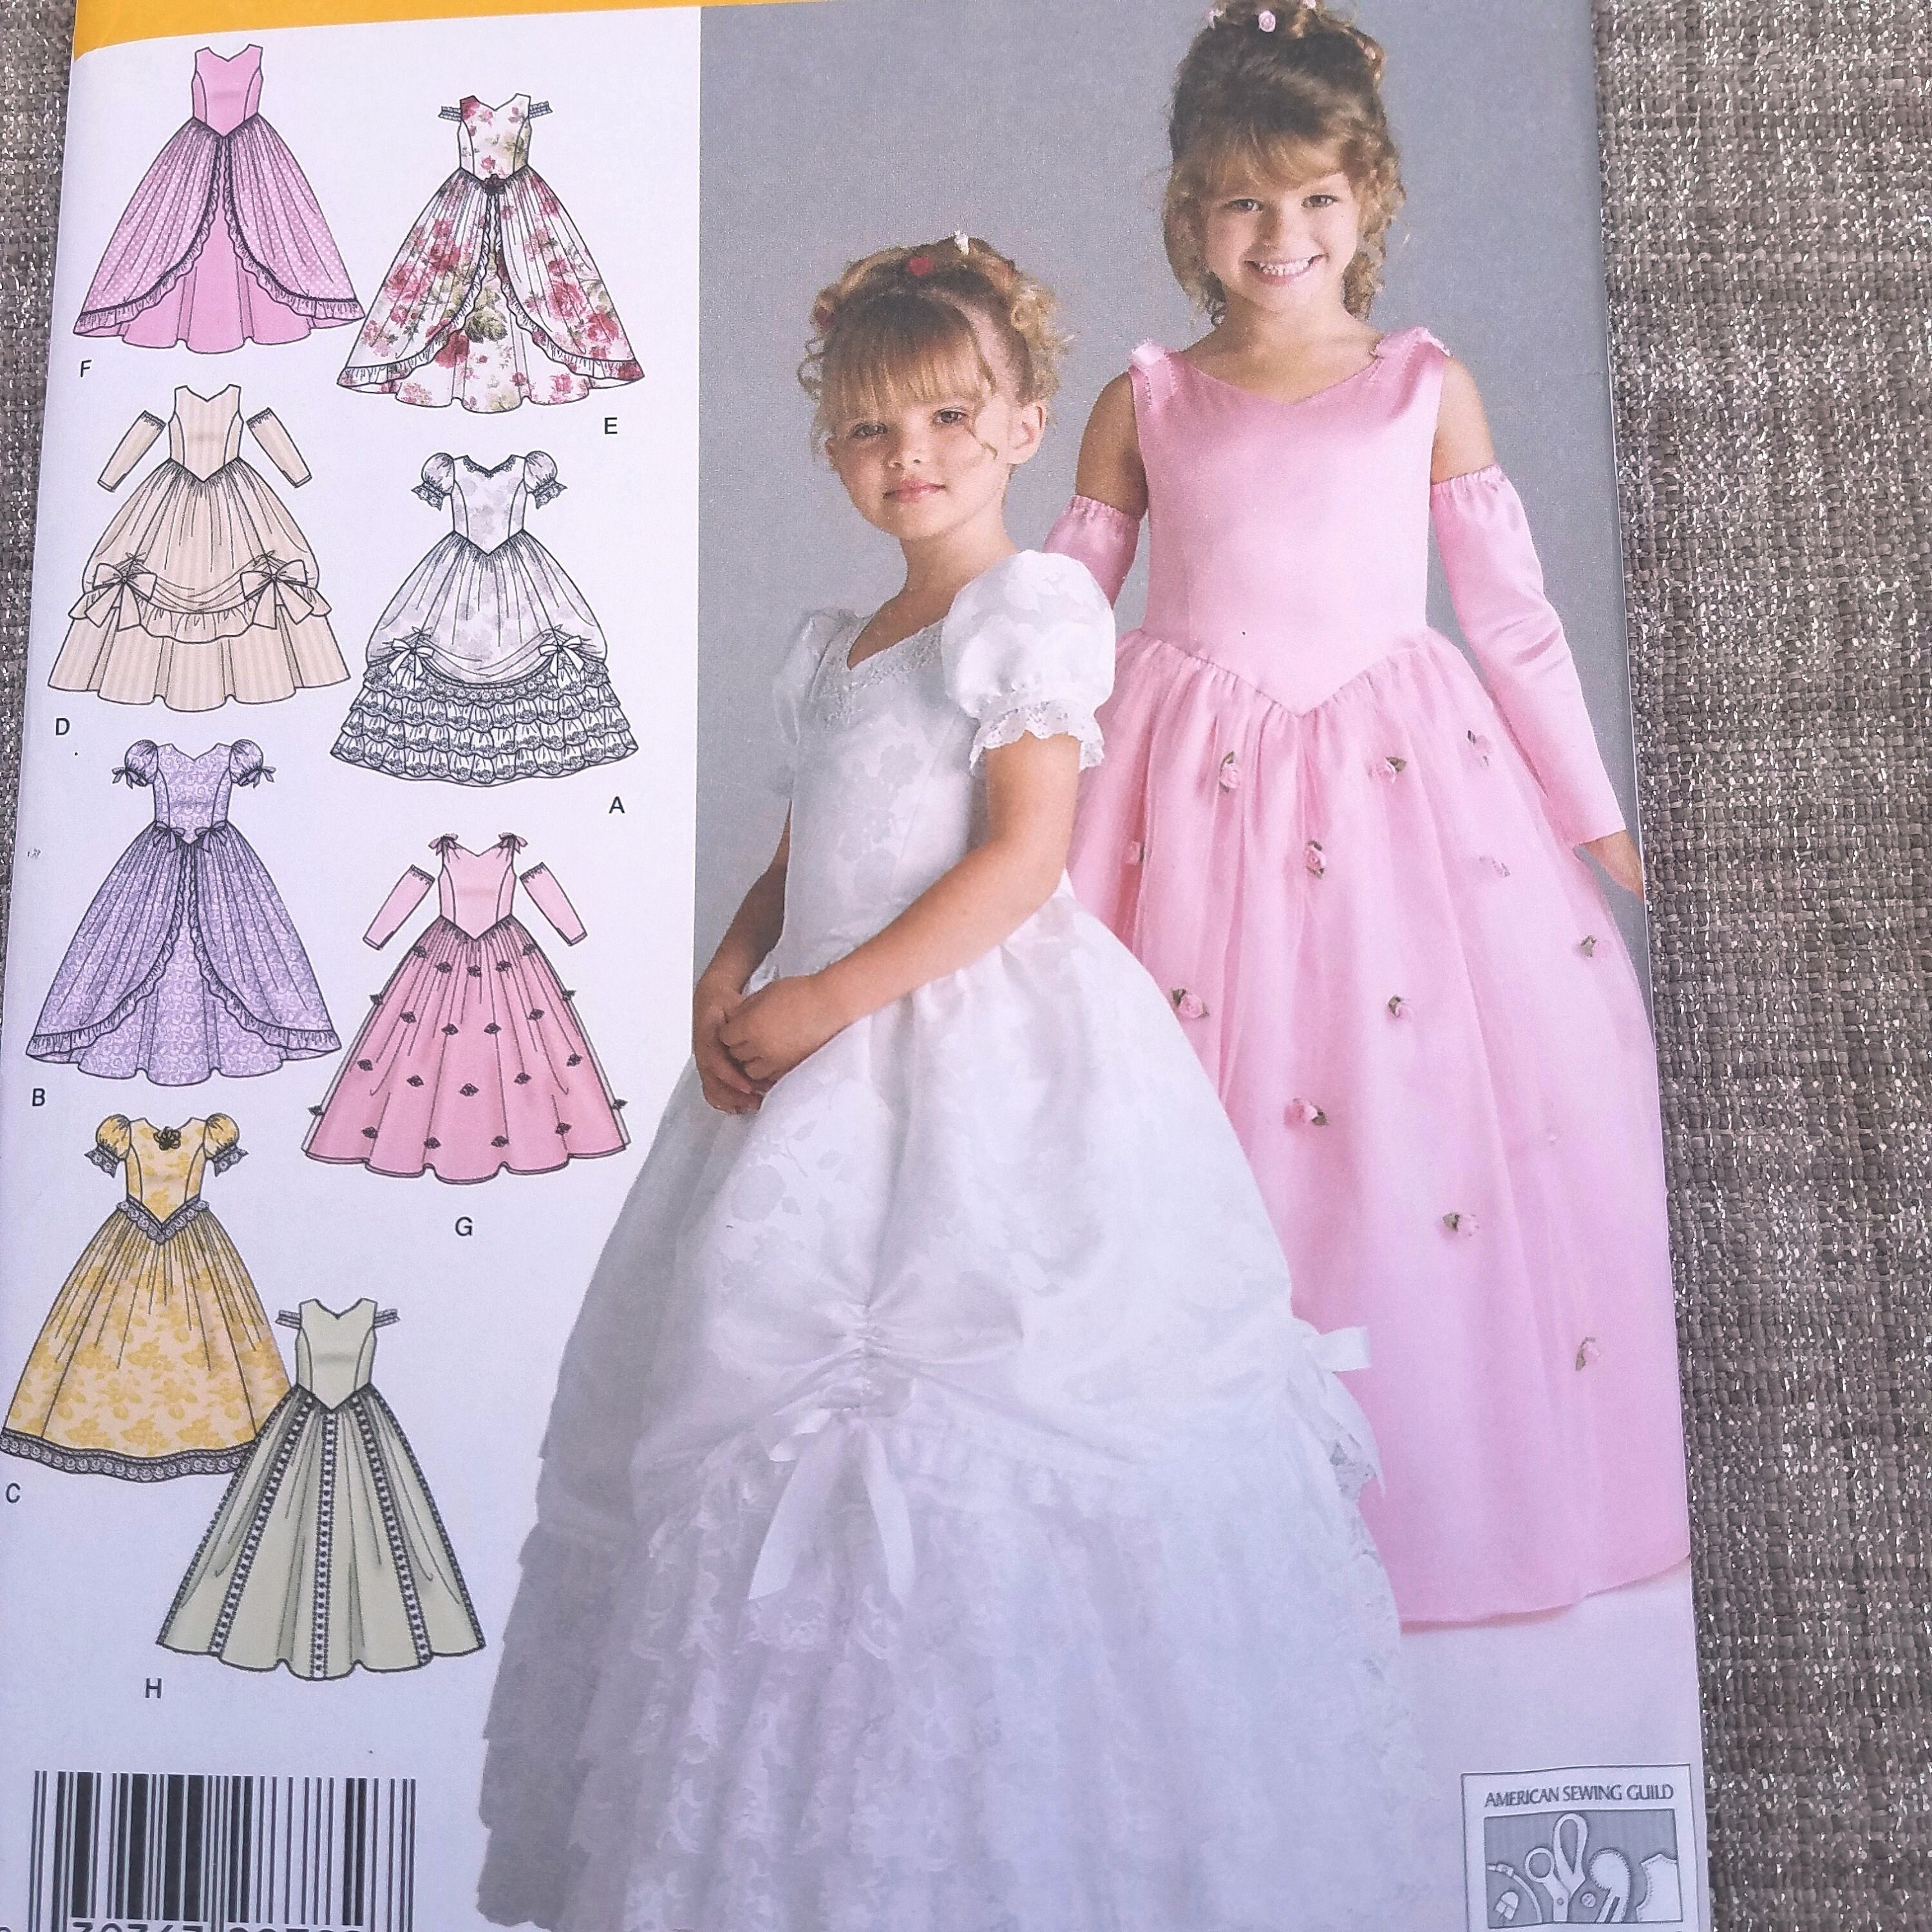 How to Sew a Dress: 19 DIY Dress Patterns for Girls | FaveCrafts.com